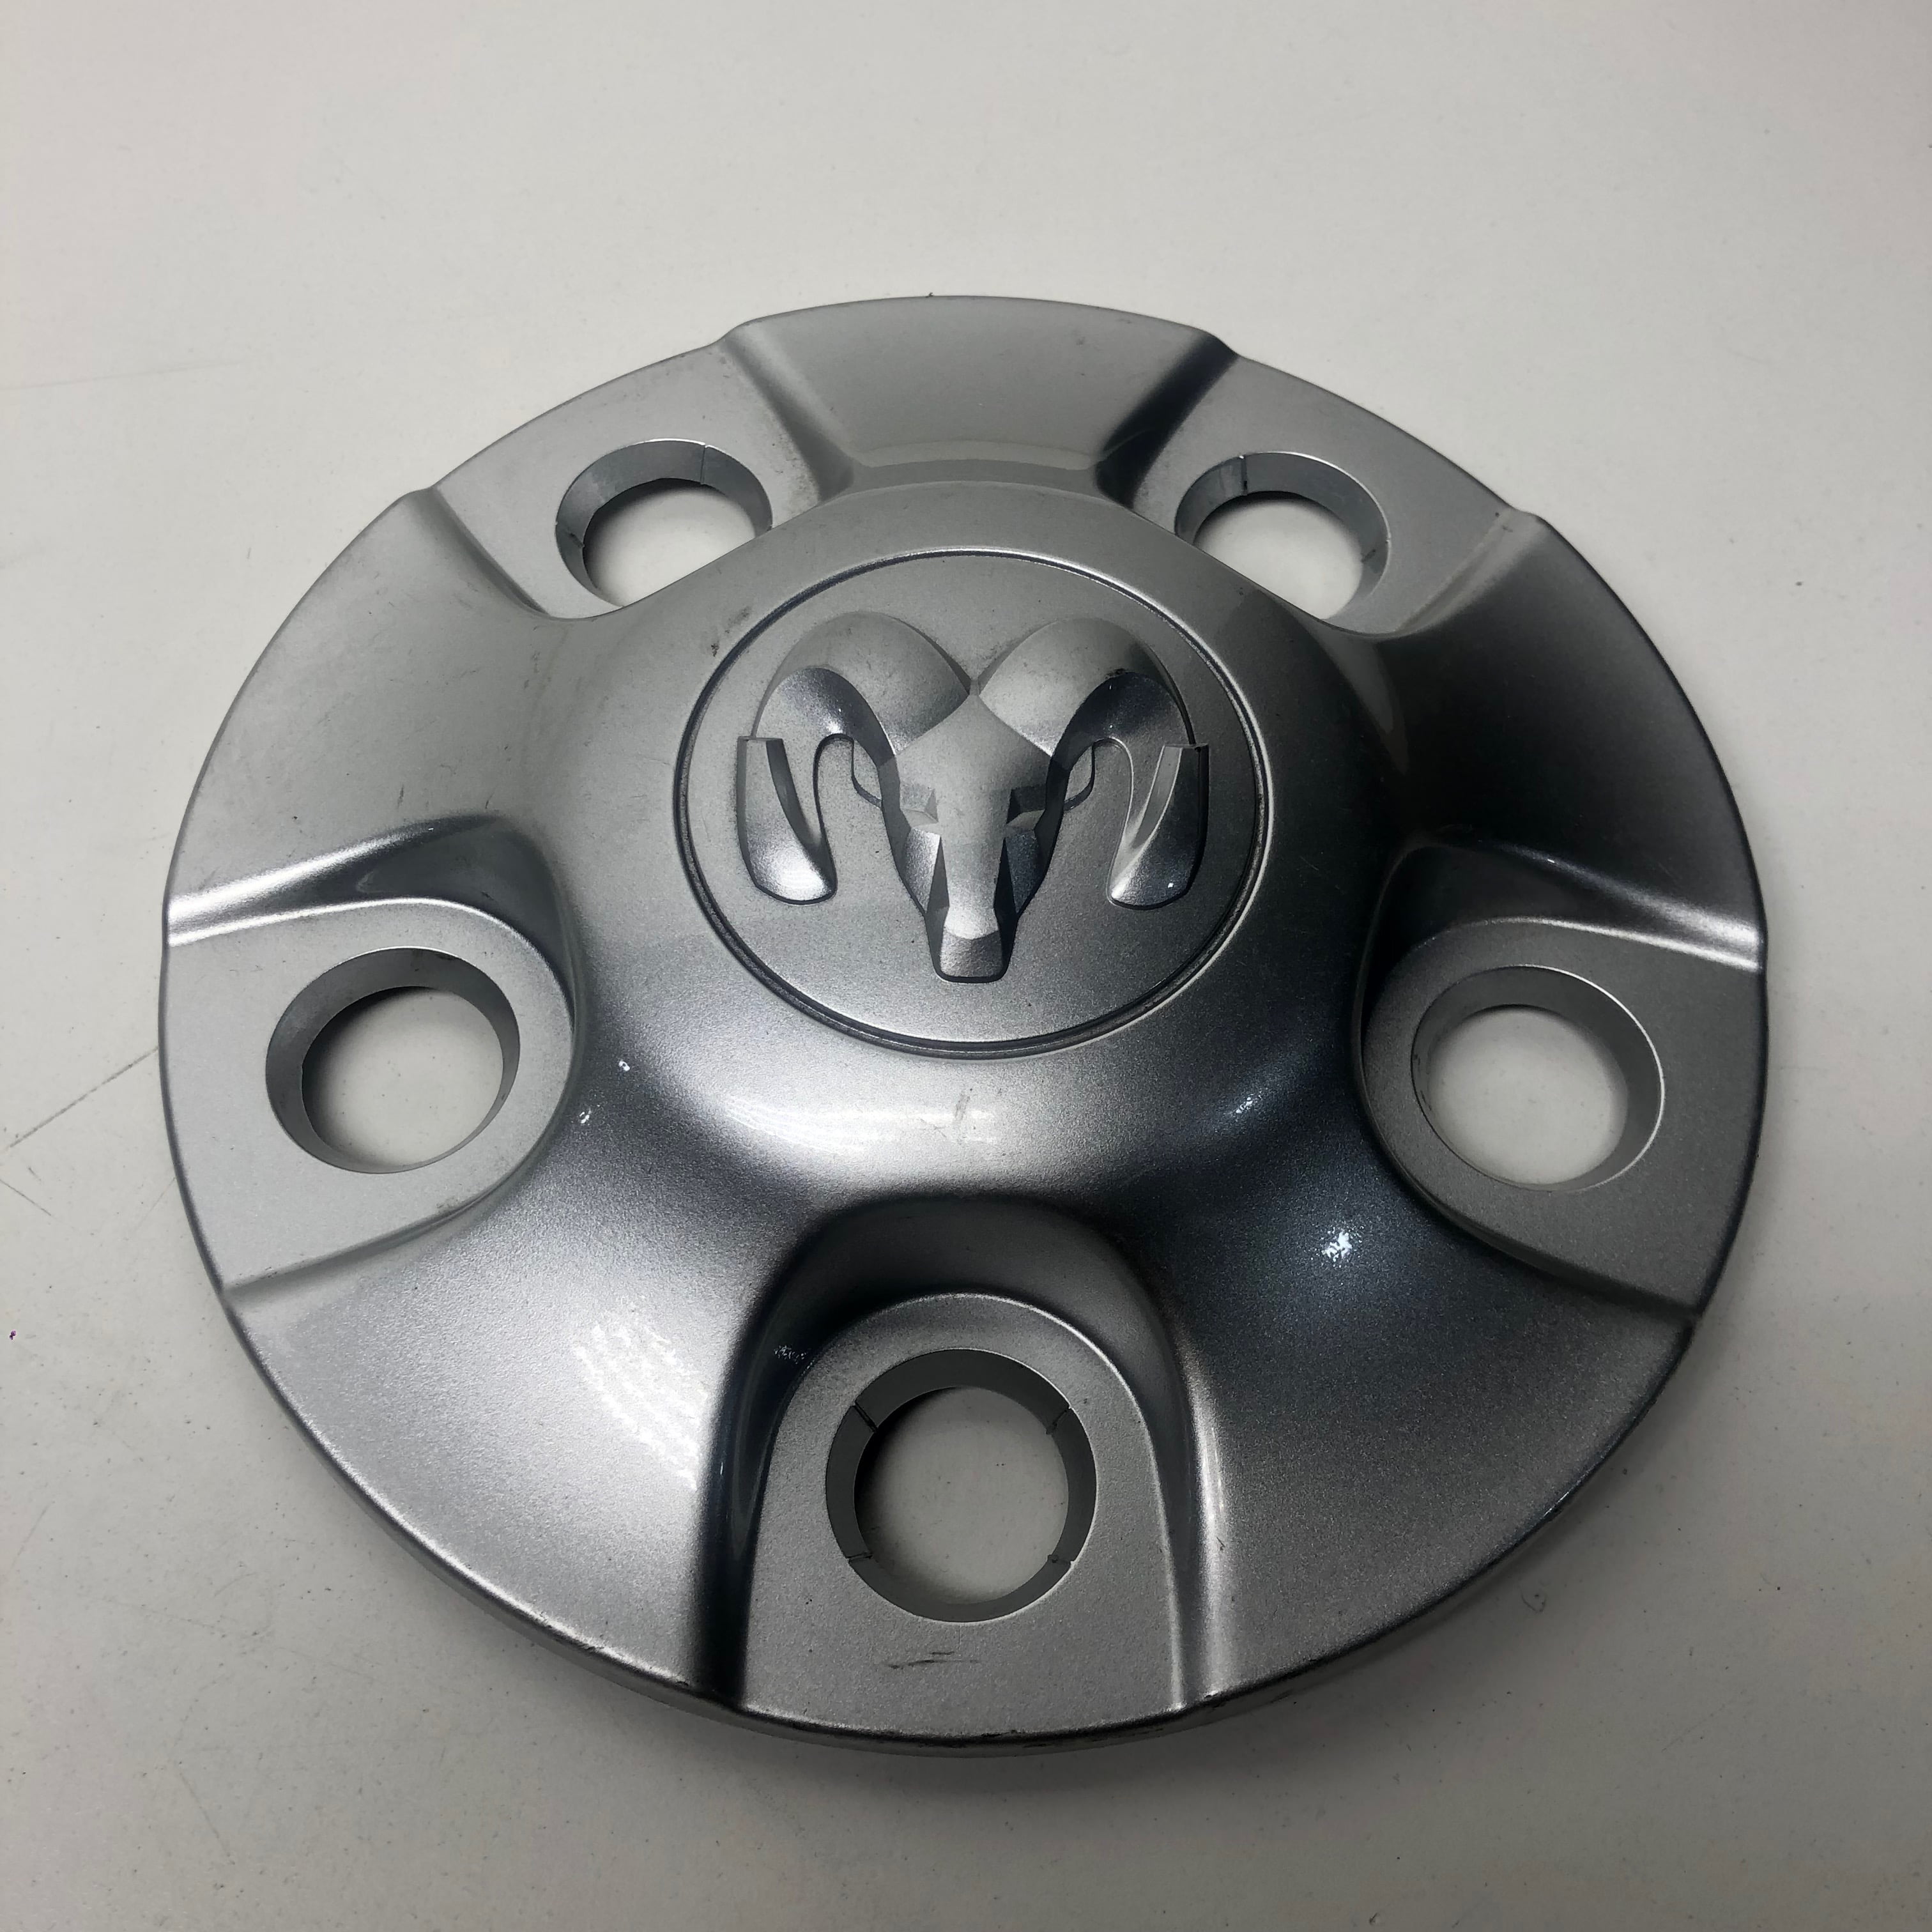 ZKHXFS 4 Pcs Diameter 2.5 inch hub Center Cap hub caps for Dodge Alternatives 